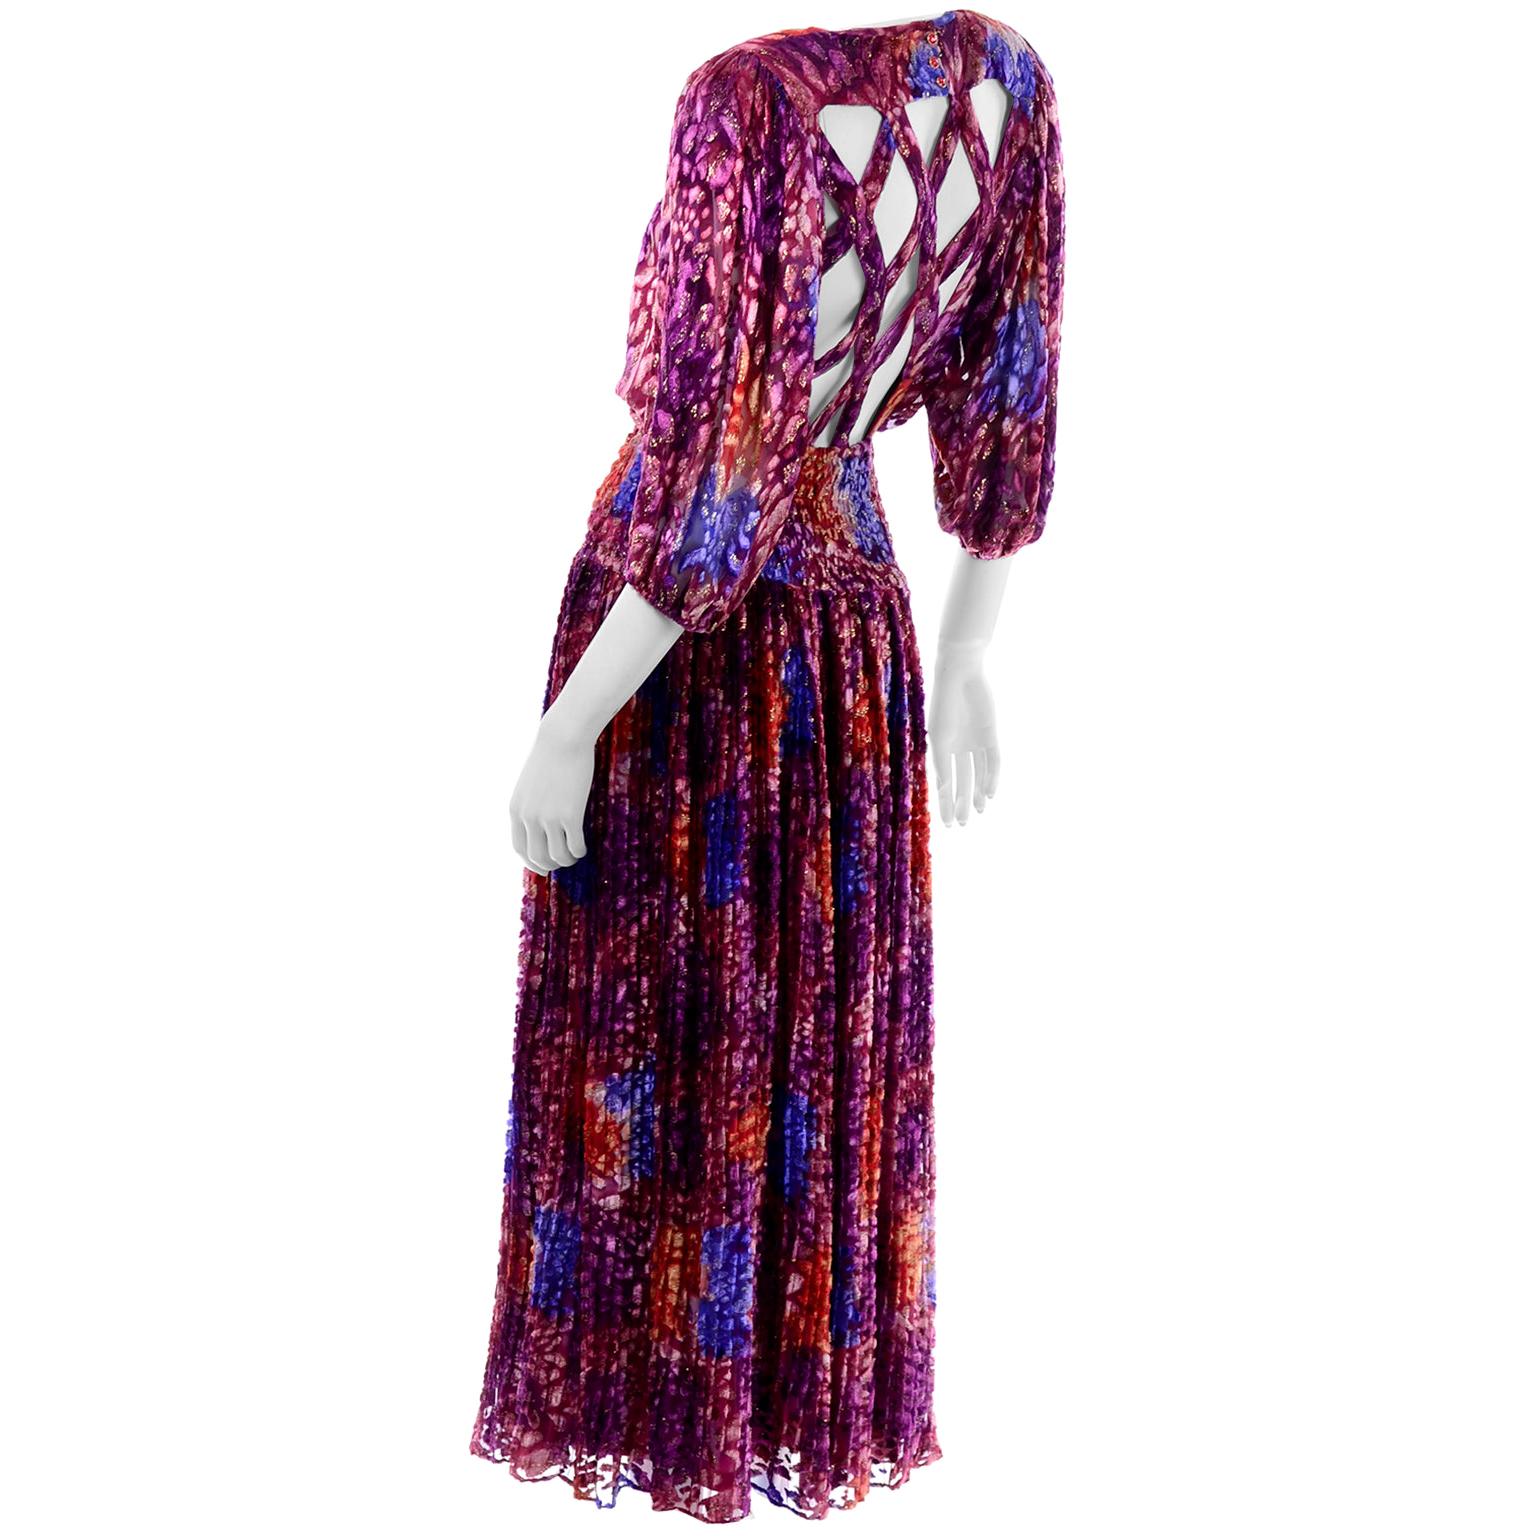 Diane Freis Vintage Purple Pink Velvet Metallic Silk Dress W Open Lattice Work